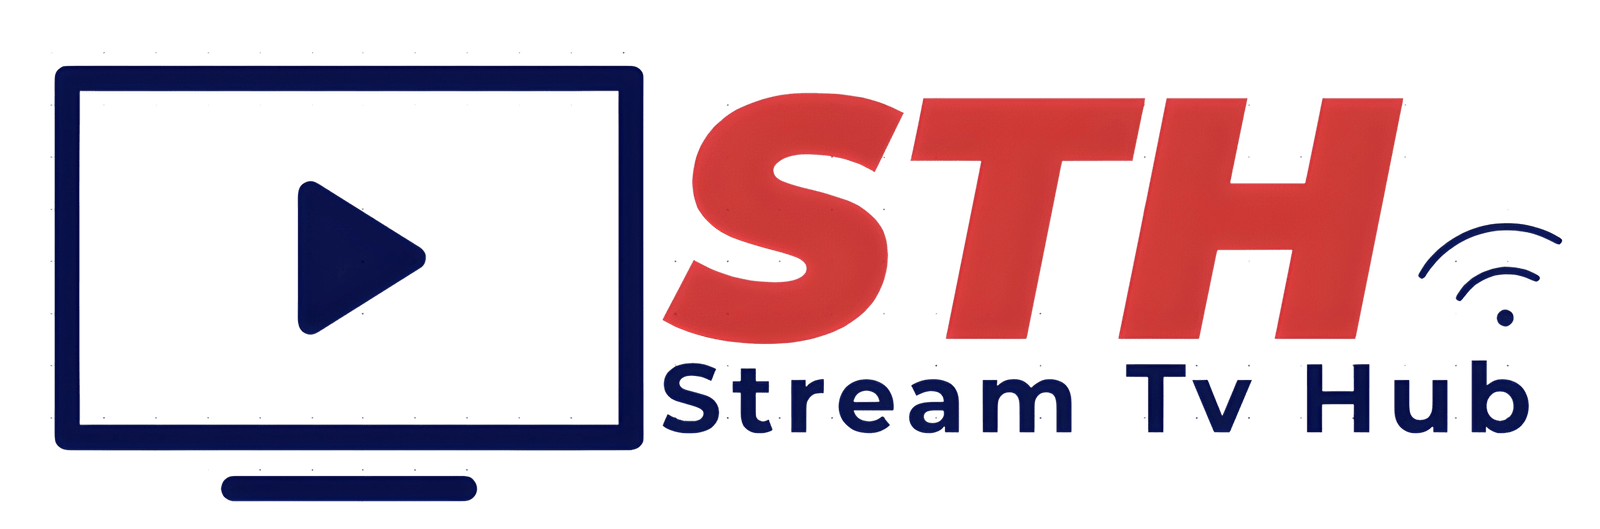 stream tv hub